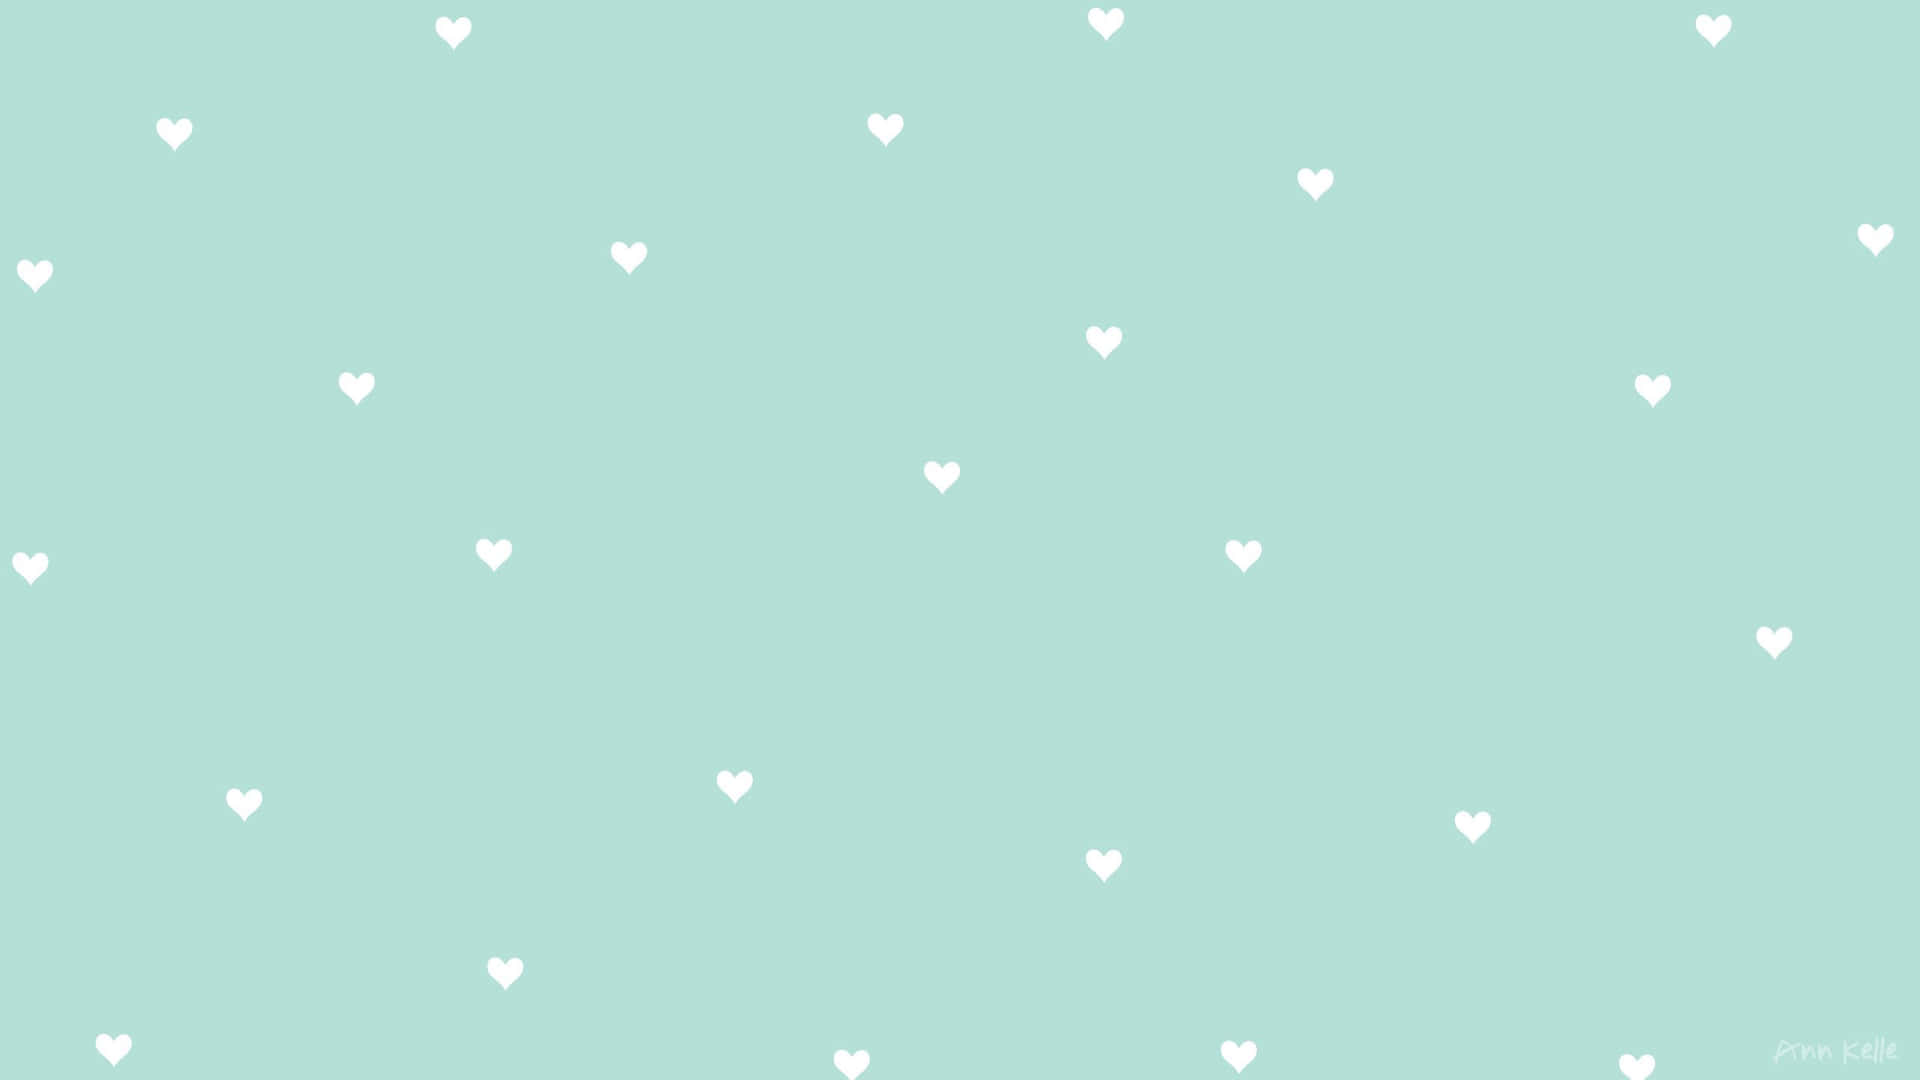 Føl kærligheden med disse lyse,myntegrønne hjerter. Wallpaper